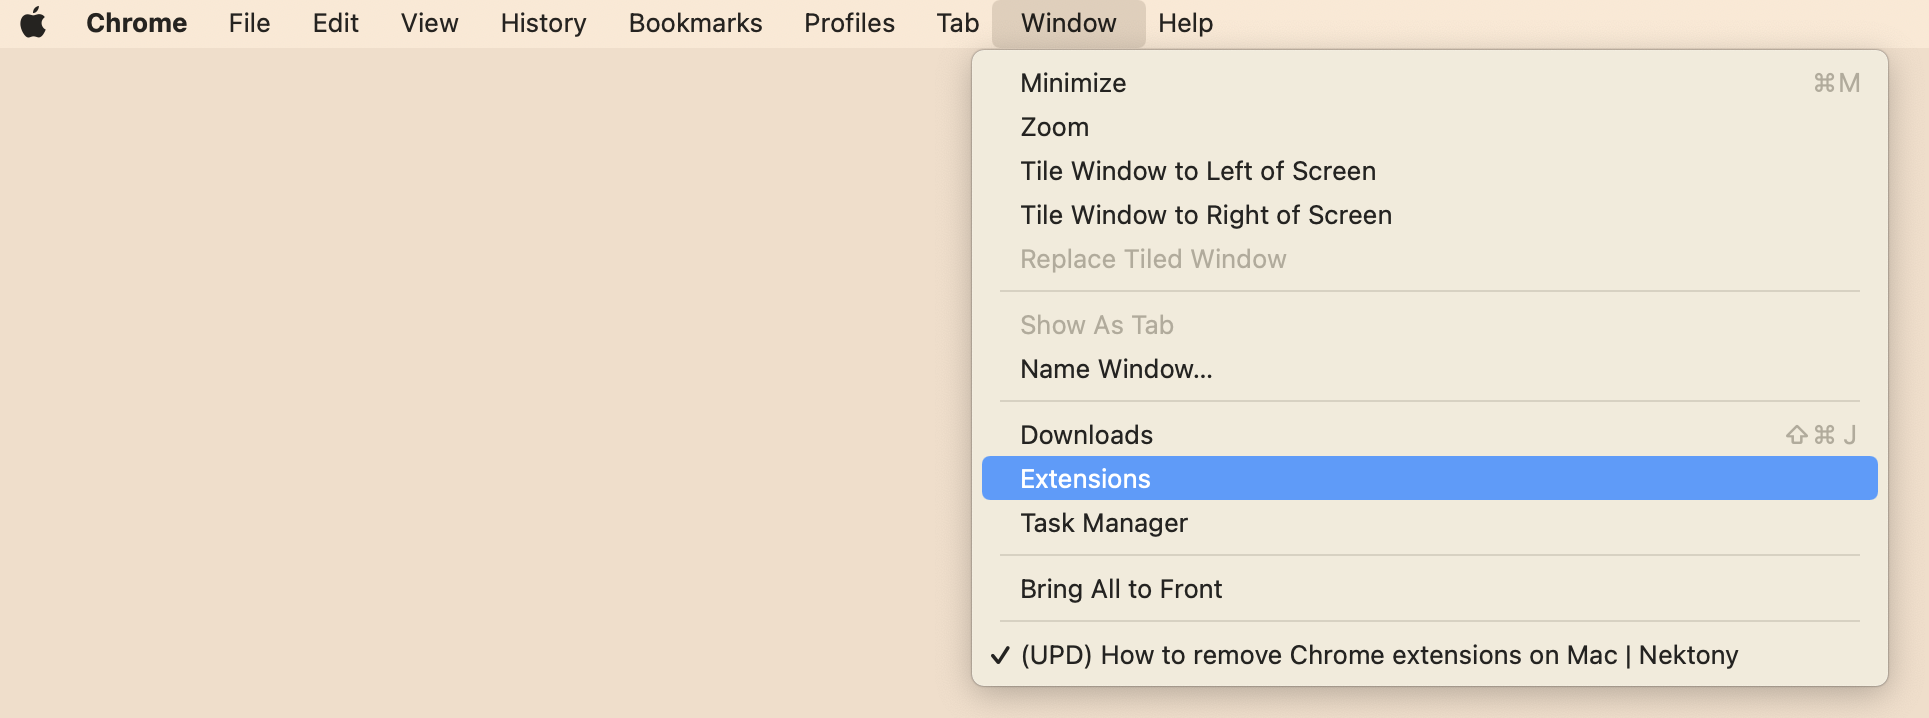 Chrome menu showing extensions option